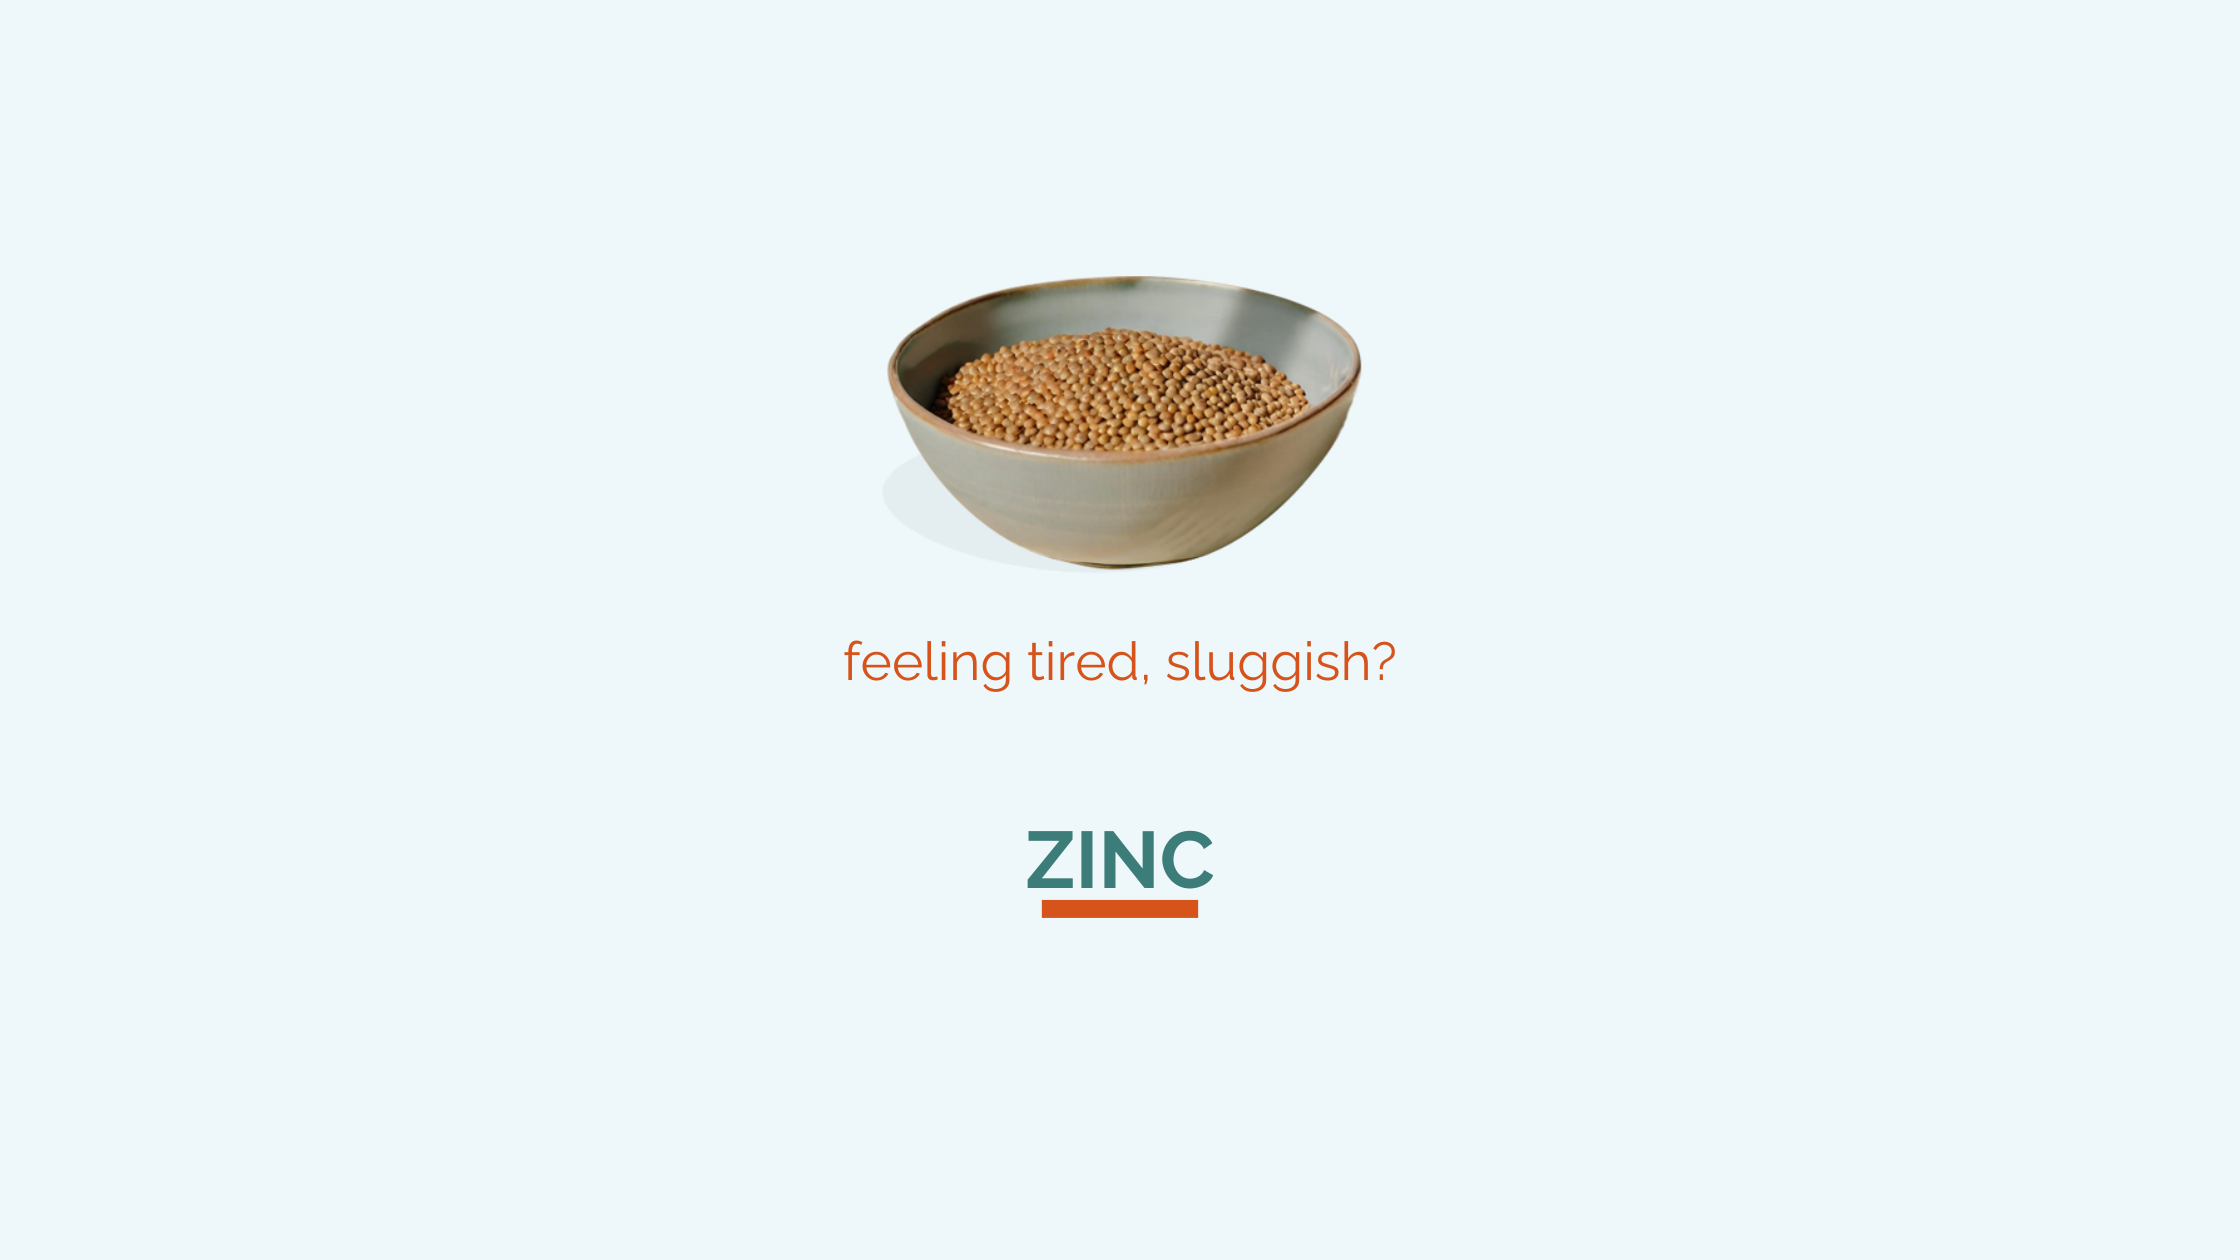 Feeling tired and sluggish? Take Zinc.